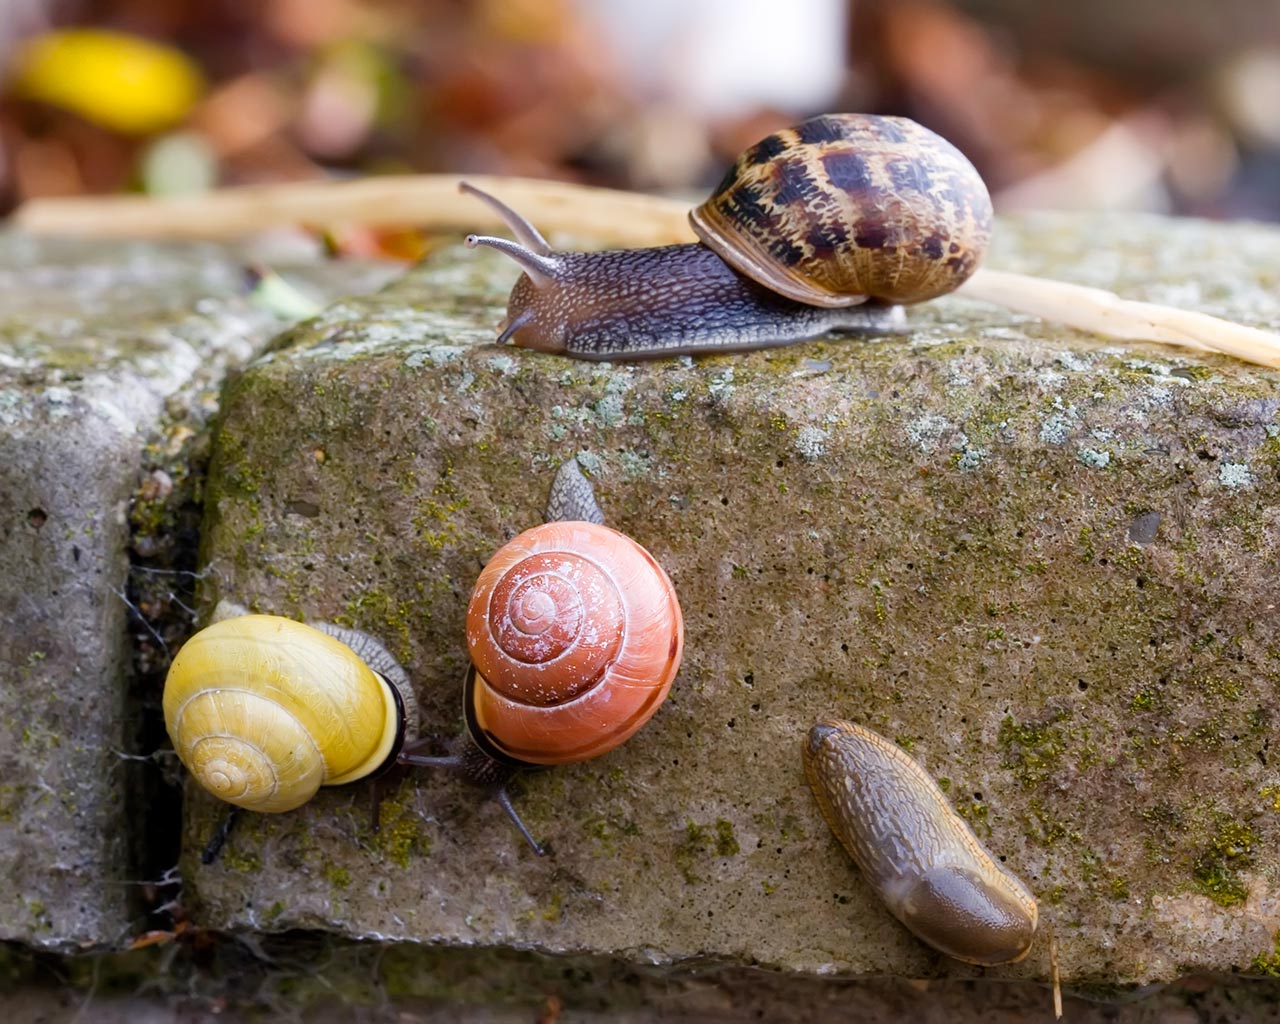 snail wallpaper,snails and slugs,snail,sea snail,molluscs,lymnaeidae